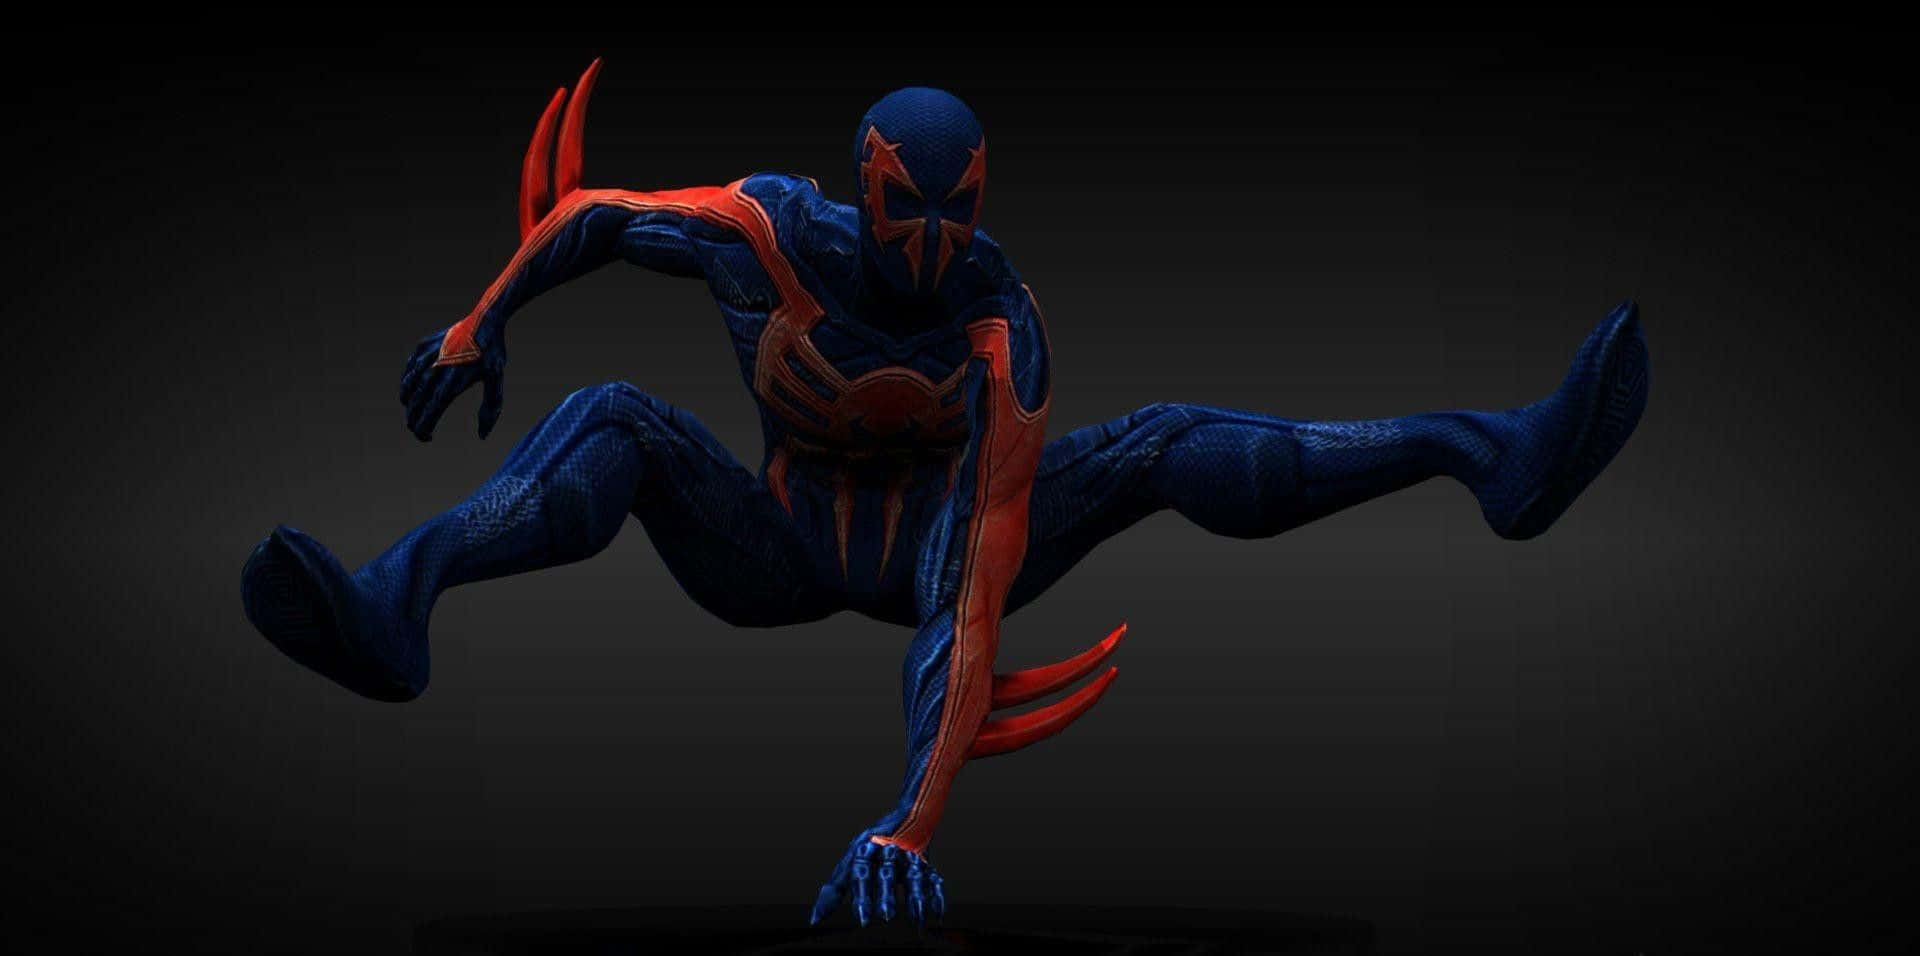 Spiderman 2099 Repleto De Acción En Un Vibrante Paisaje Urbano. Fondo de pantalla